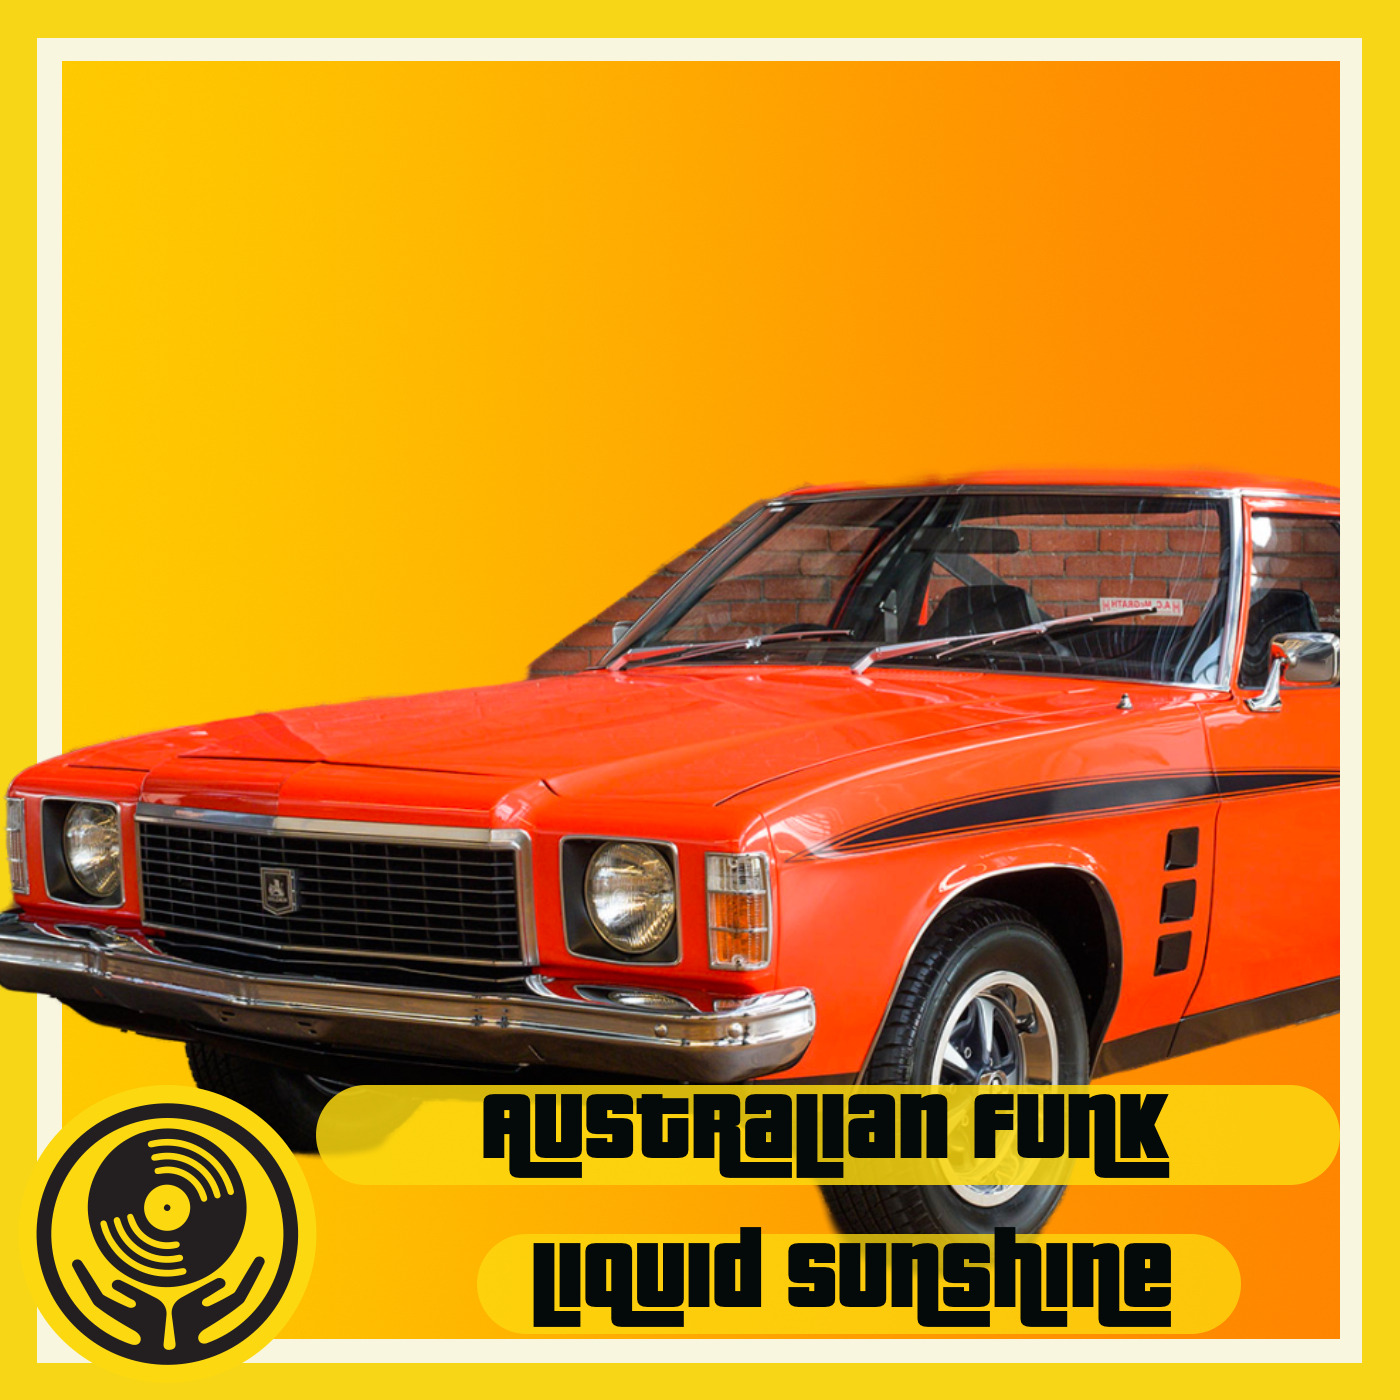 Fundamental Funk - Australian Funk - Late Nite Sunshine with Liquid Sunshine @ 2XX FM - Show #122 - 01-09-22